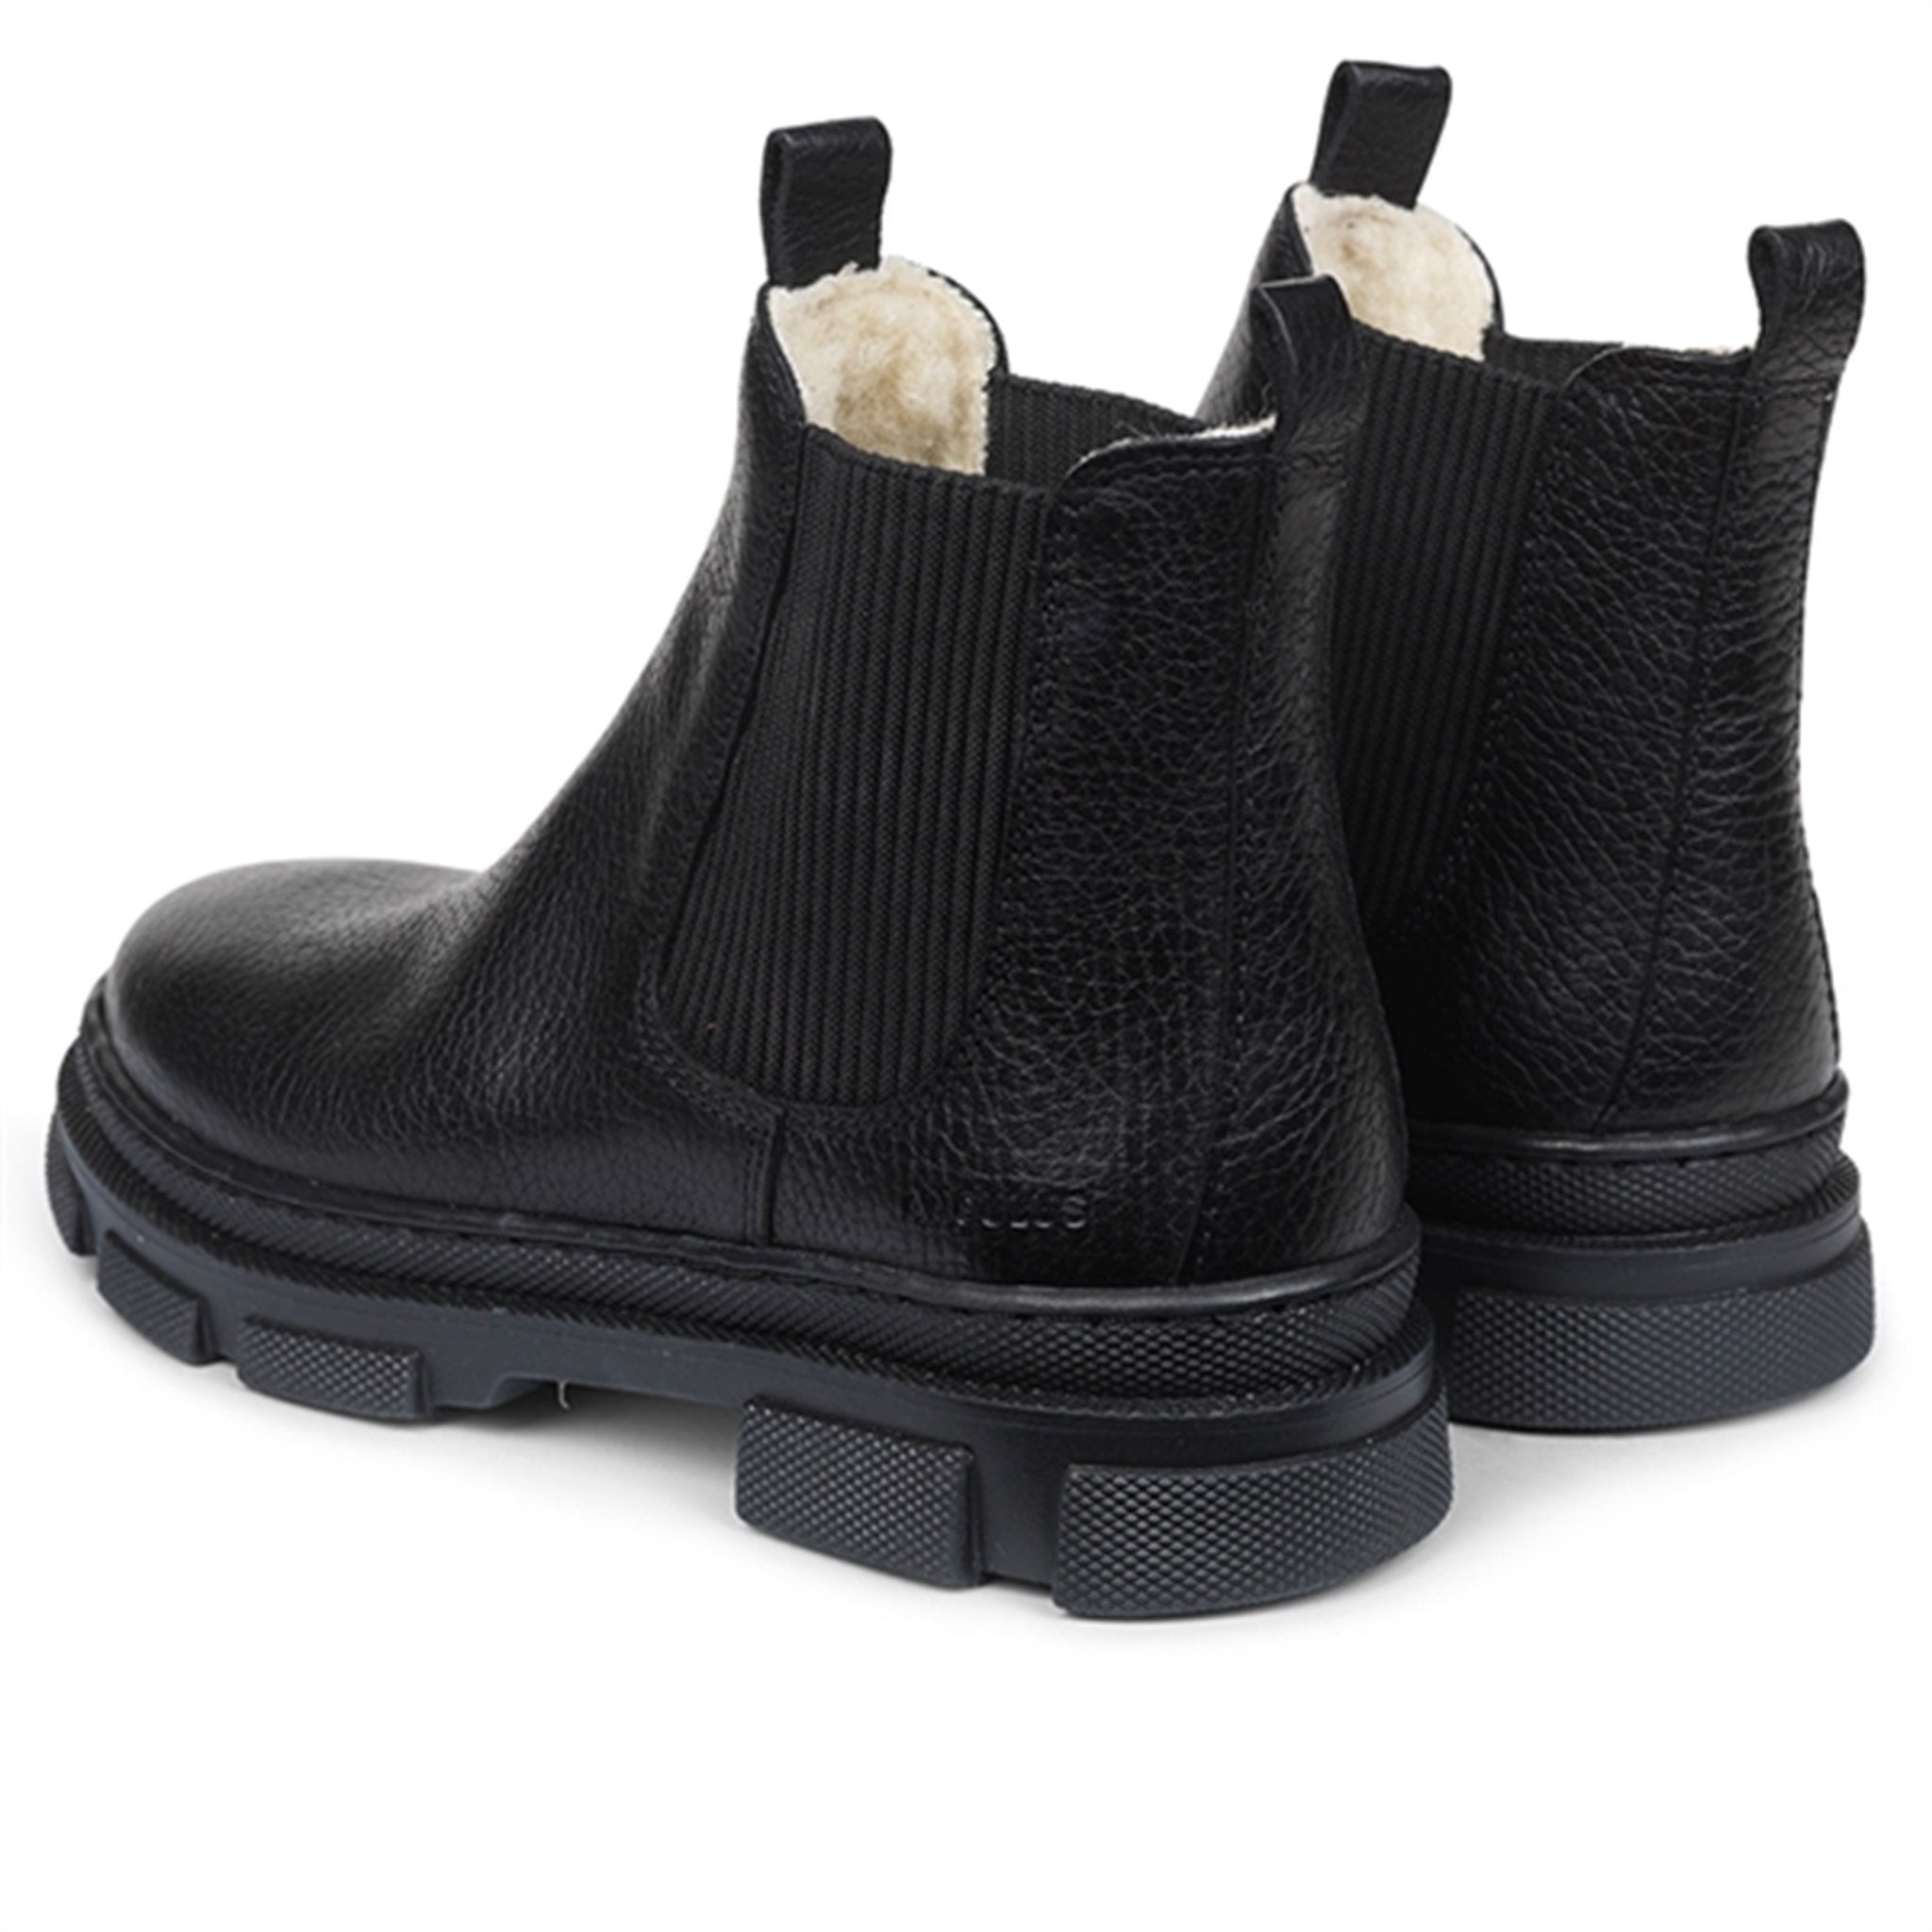 Angulus Boots w Elastic and Wool Lining Black/Black 5